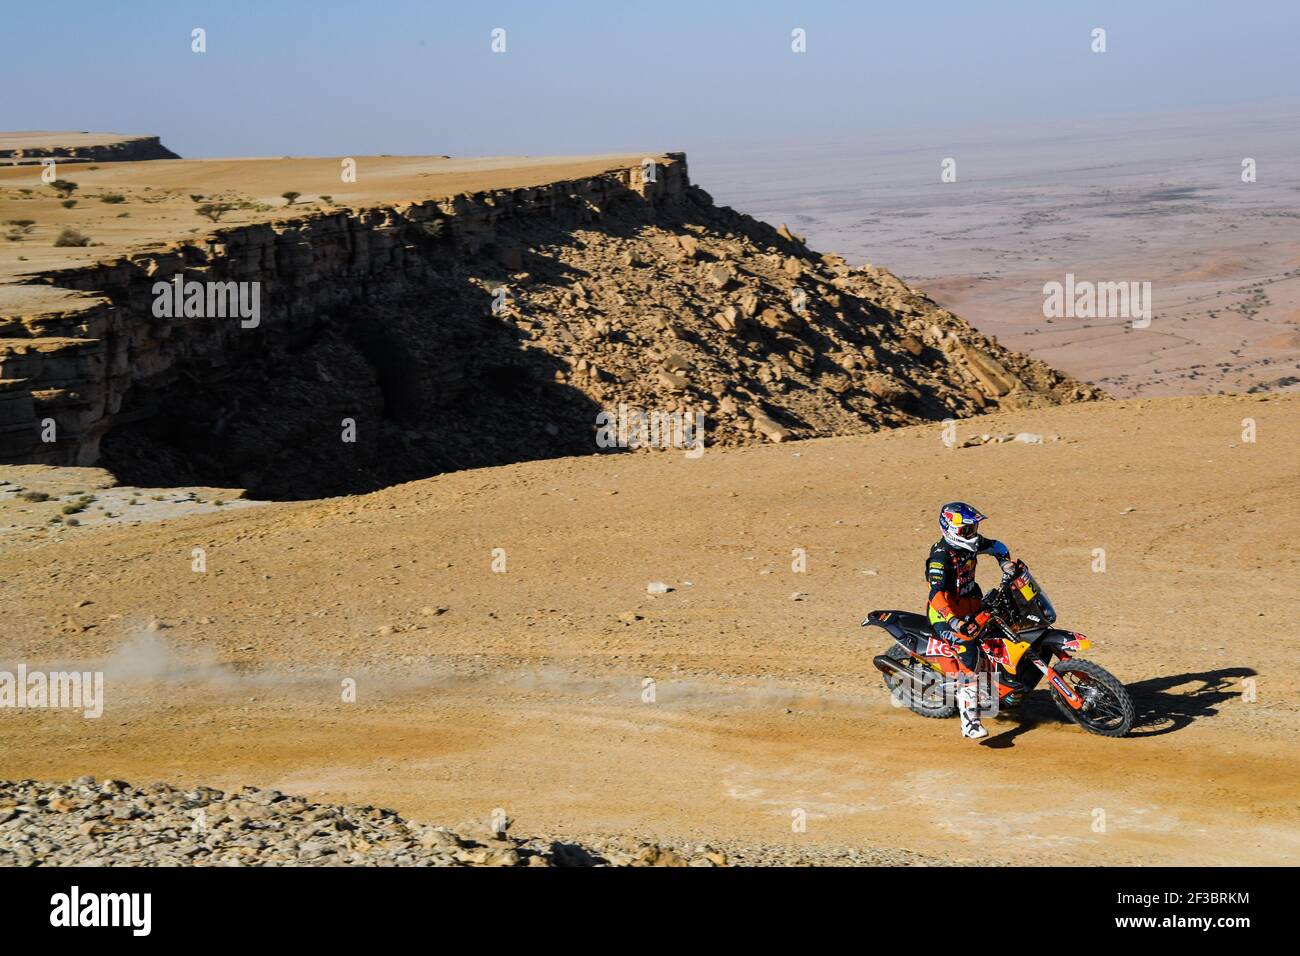 02 Walkner Matthias (aut), KTM, Red Bull KTM Factory Team, Moto, Bike, action during Stage 9 of the Dakar 2020 between Wadi Al-Dawasir and Haradh, 891 km - SS 415 km, in Saudi Arabia, on January 14, 2020 - Photo Eric Vargiolu / DPPI Stock Photo